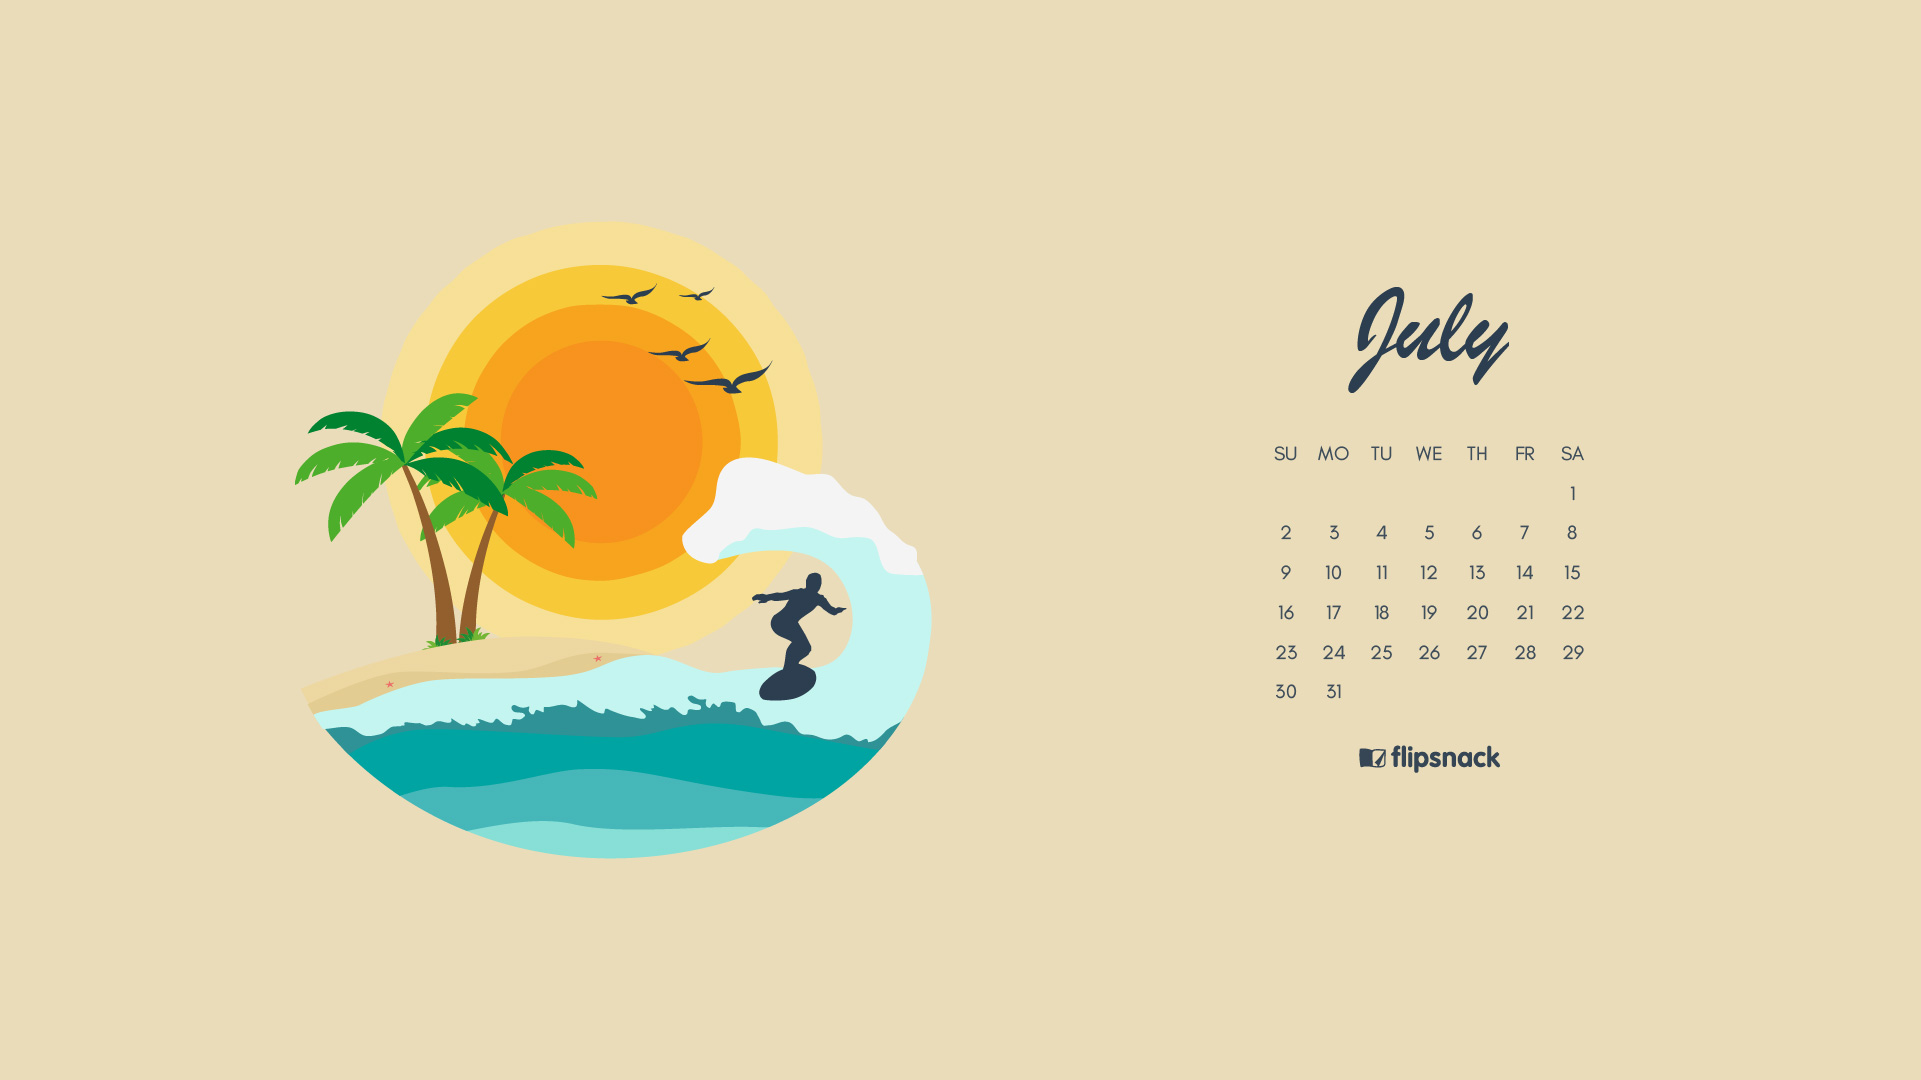 July 2017 calendar wallpaper for desktop background 1921x1080